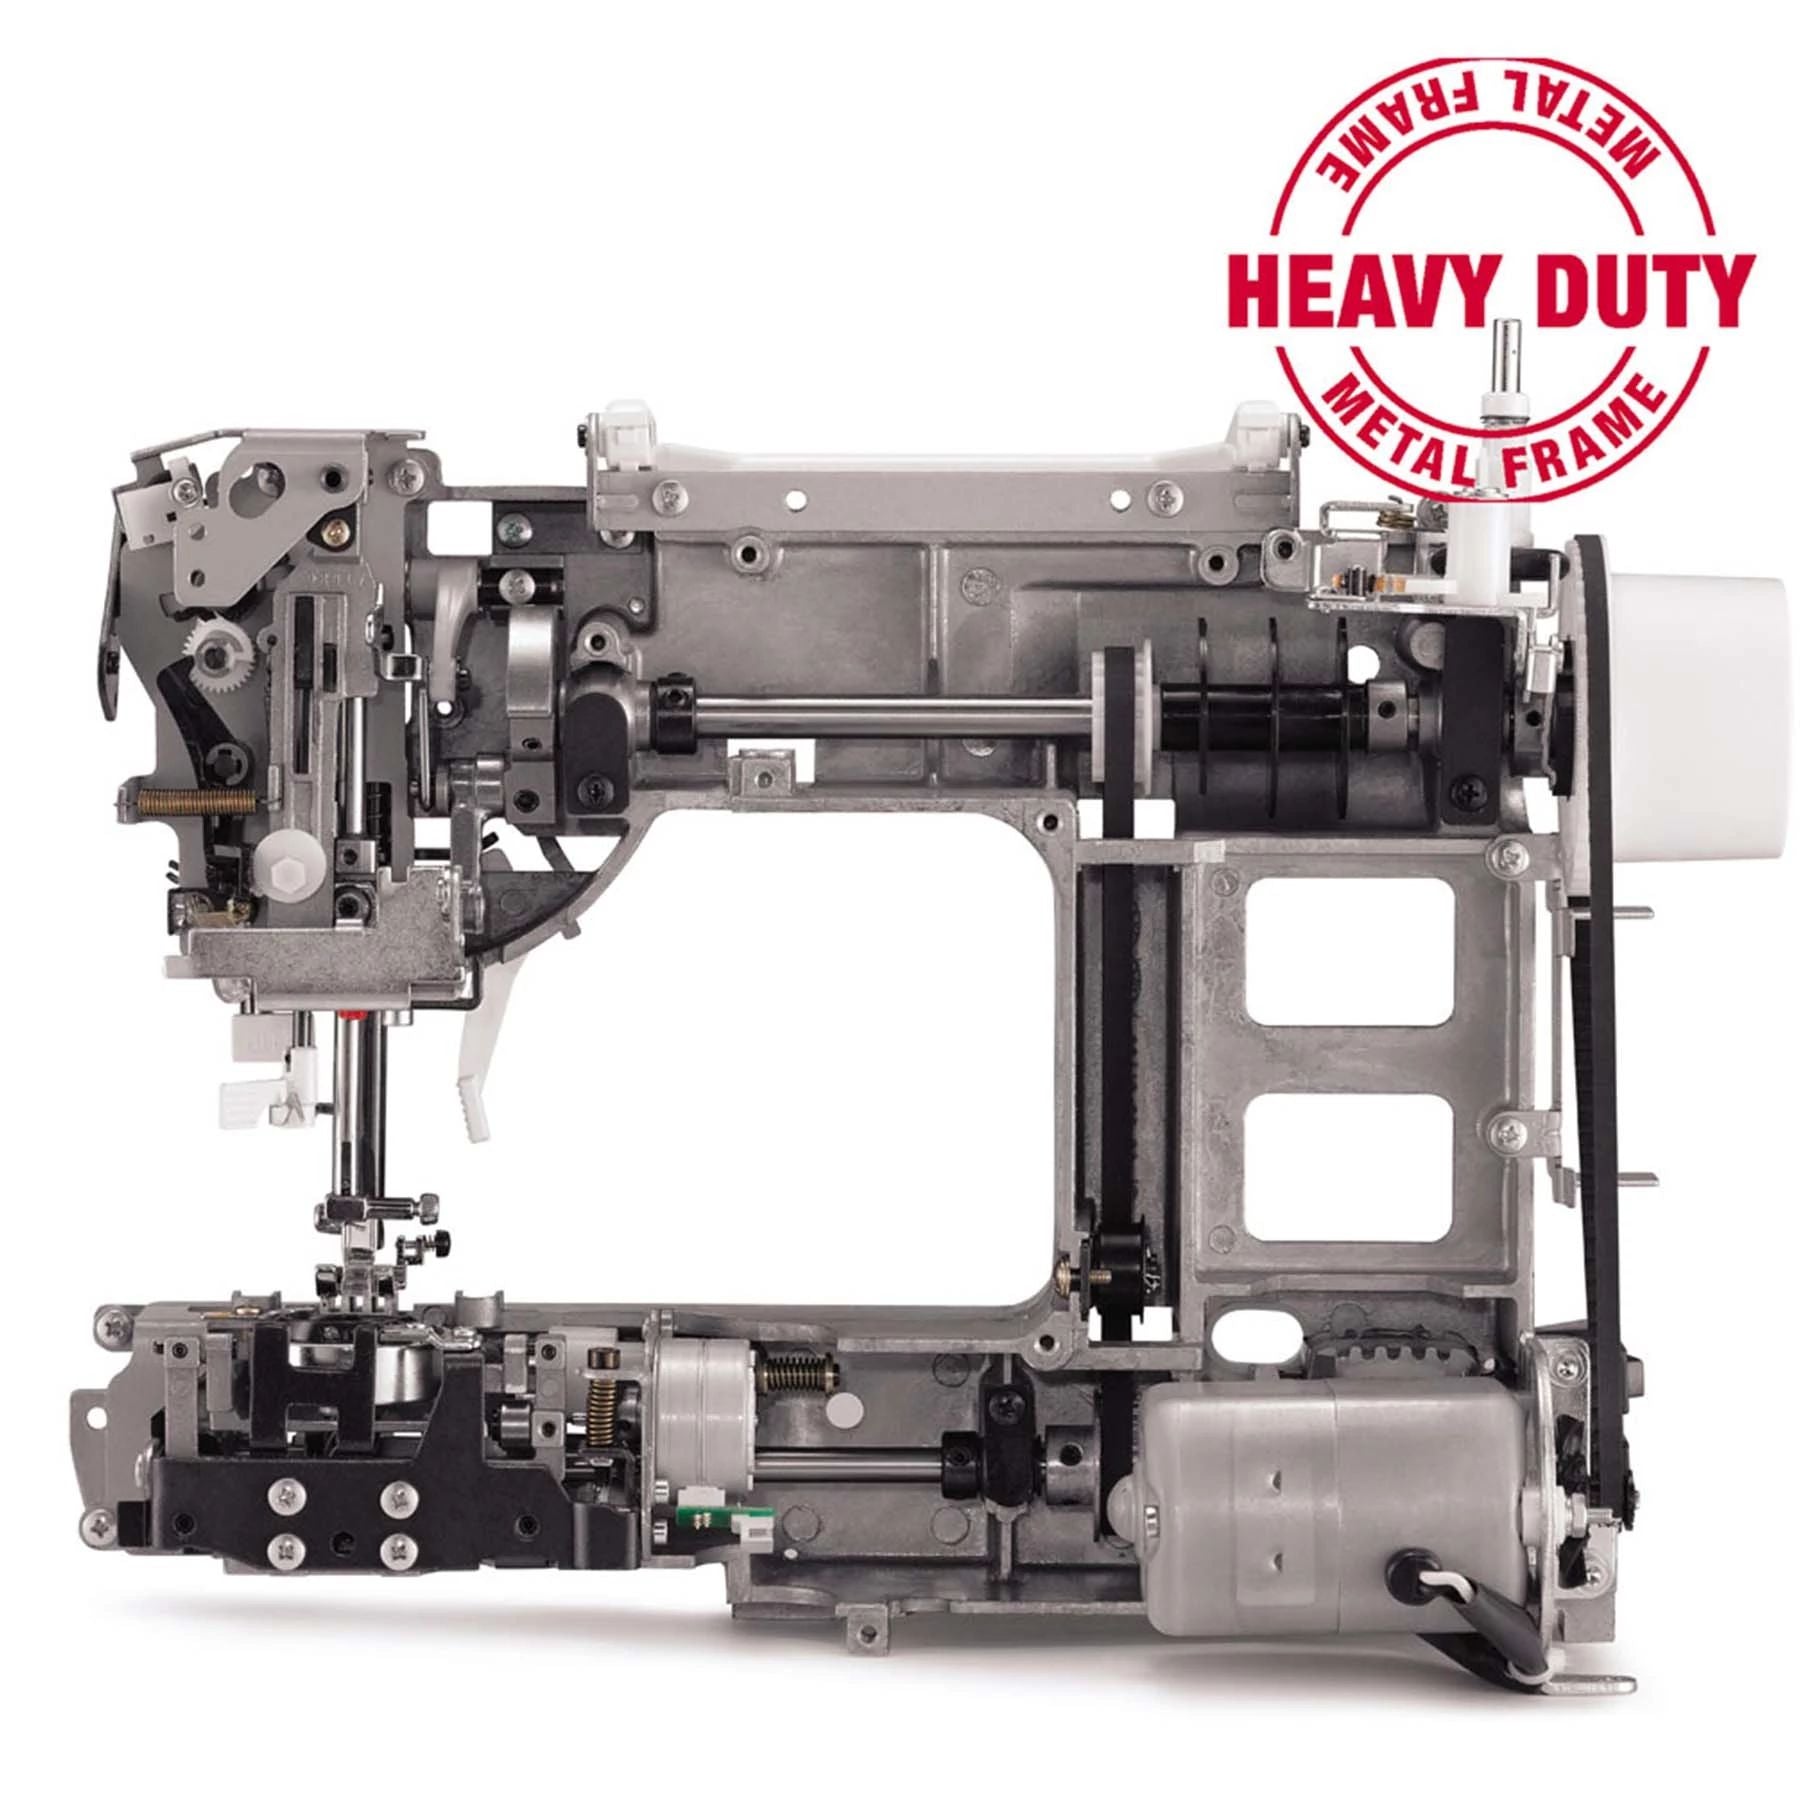 Máquina de coser SINGER® Heavy Duty 4423